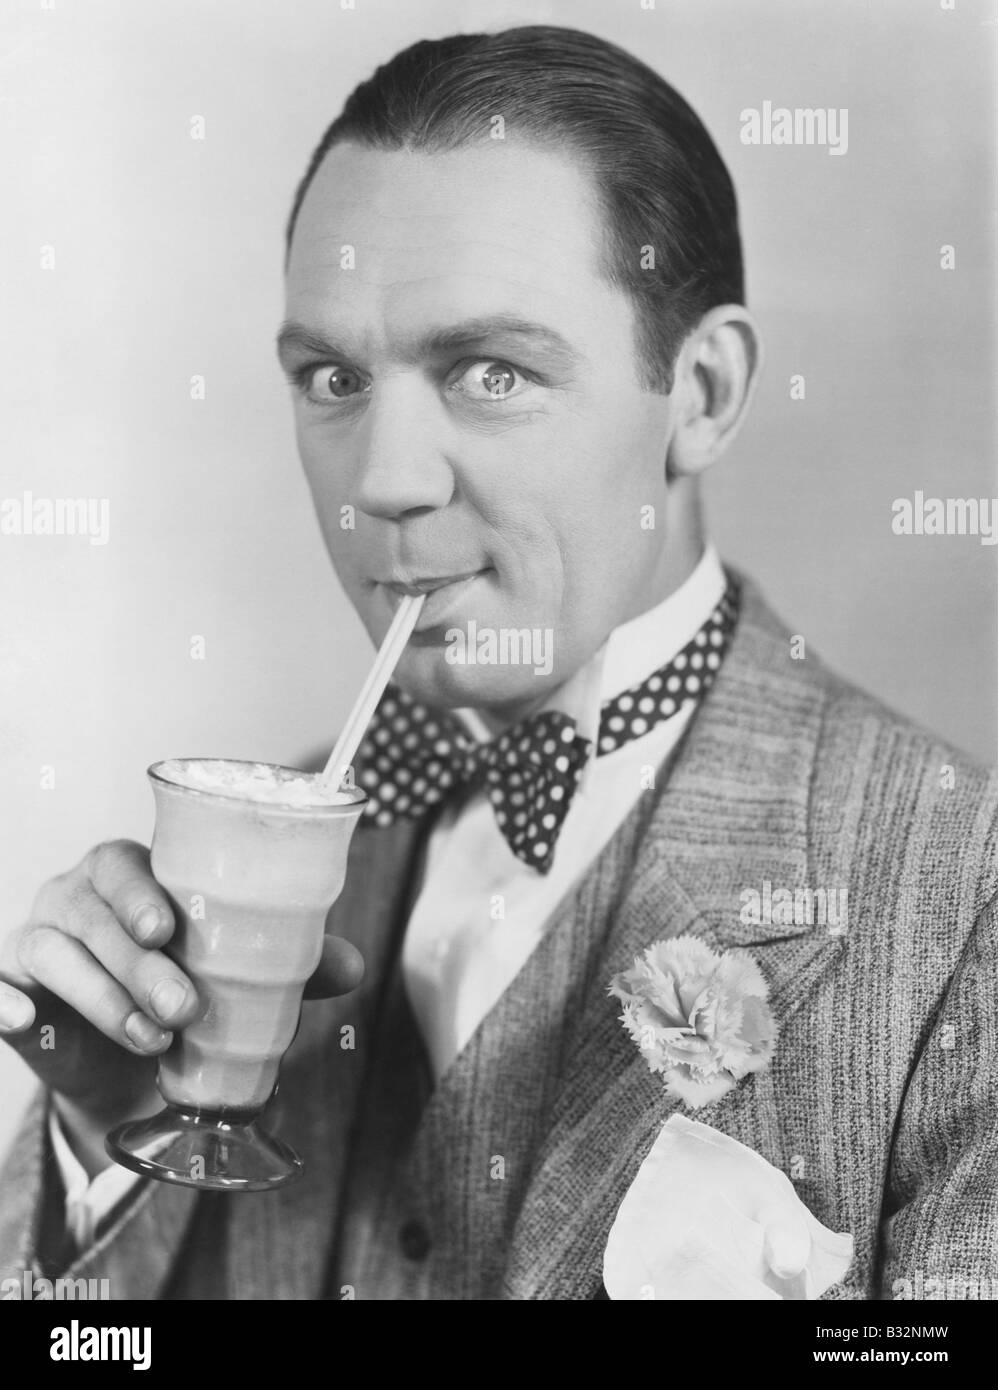 Portrait of man drinking through straw Stock Photo